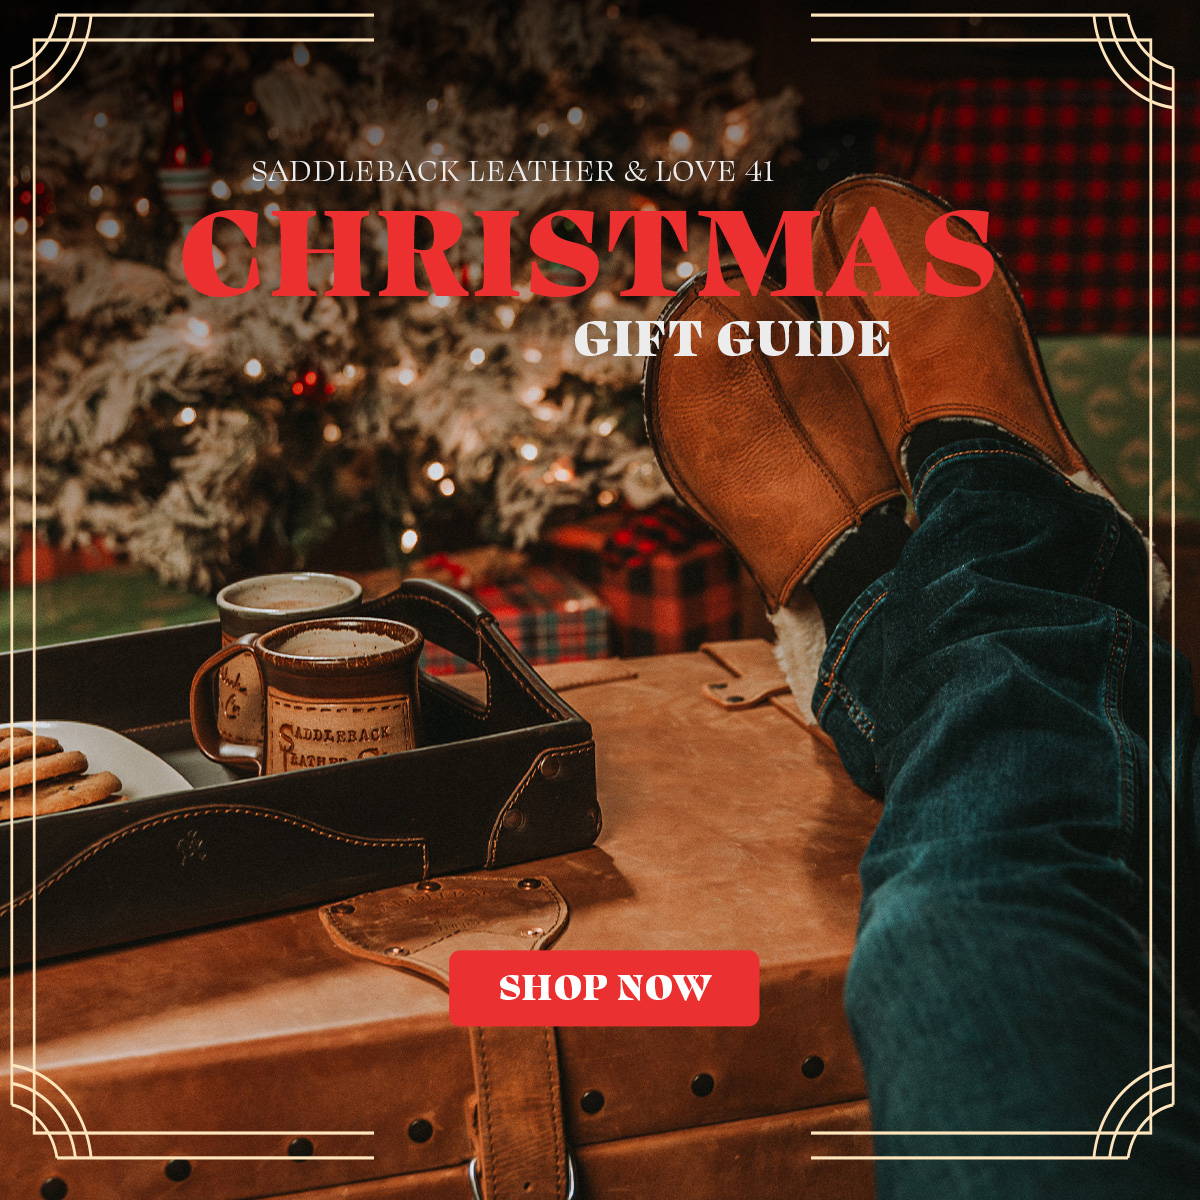 Saddleback & Love 41 Christmas Gift Guide